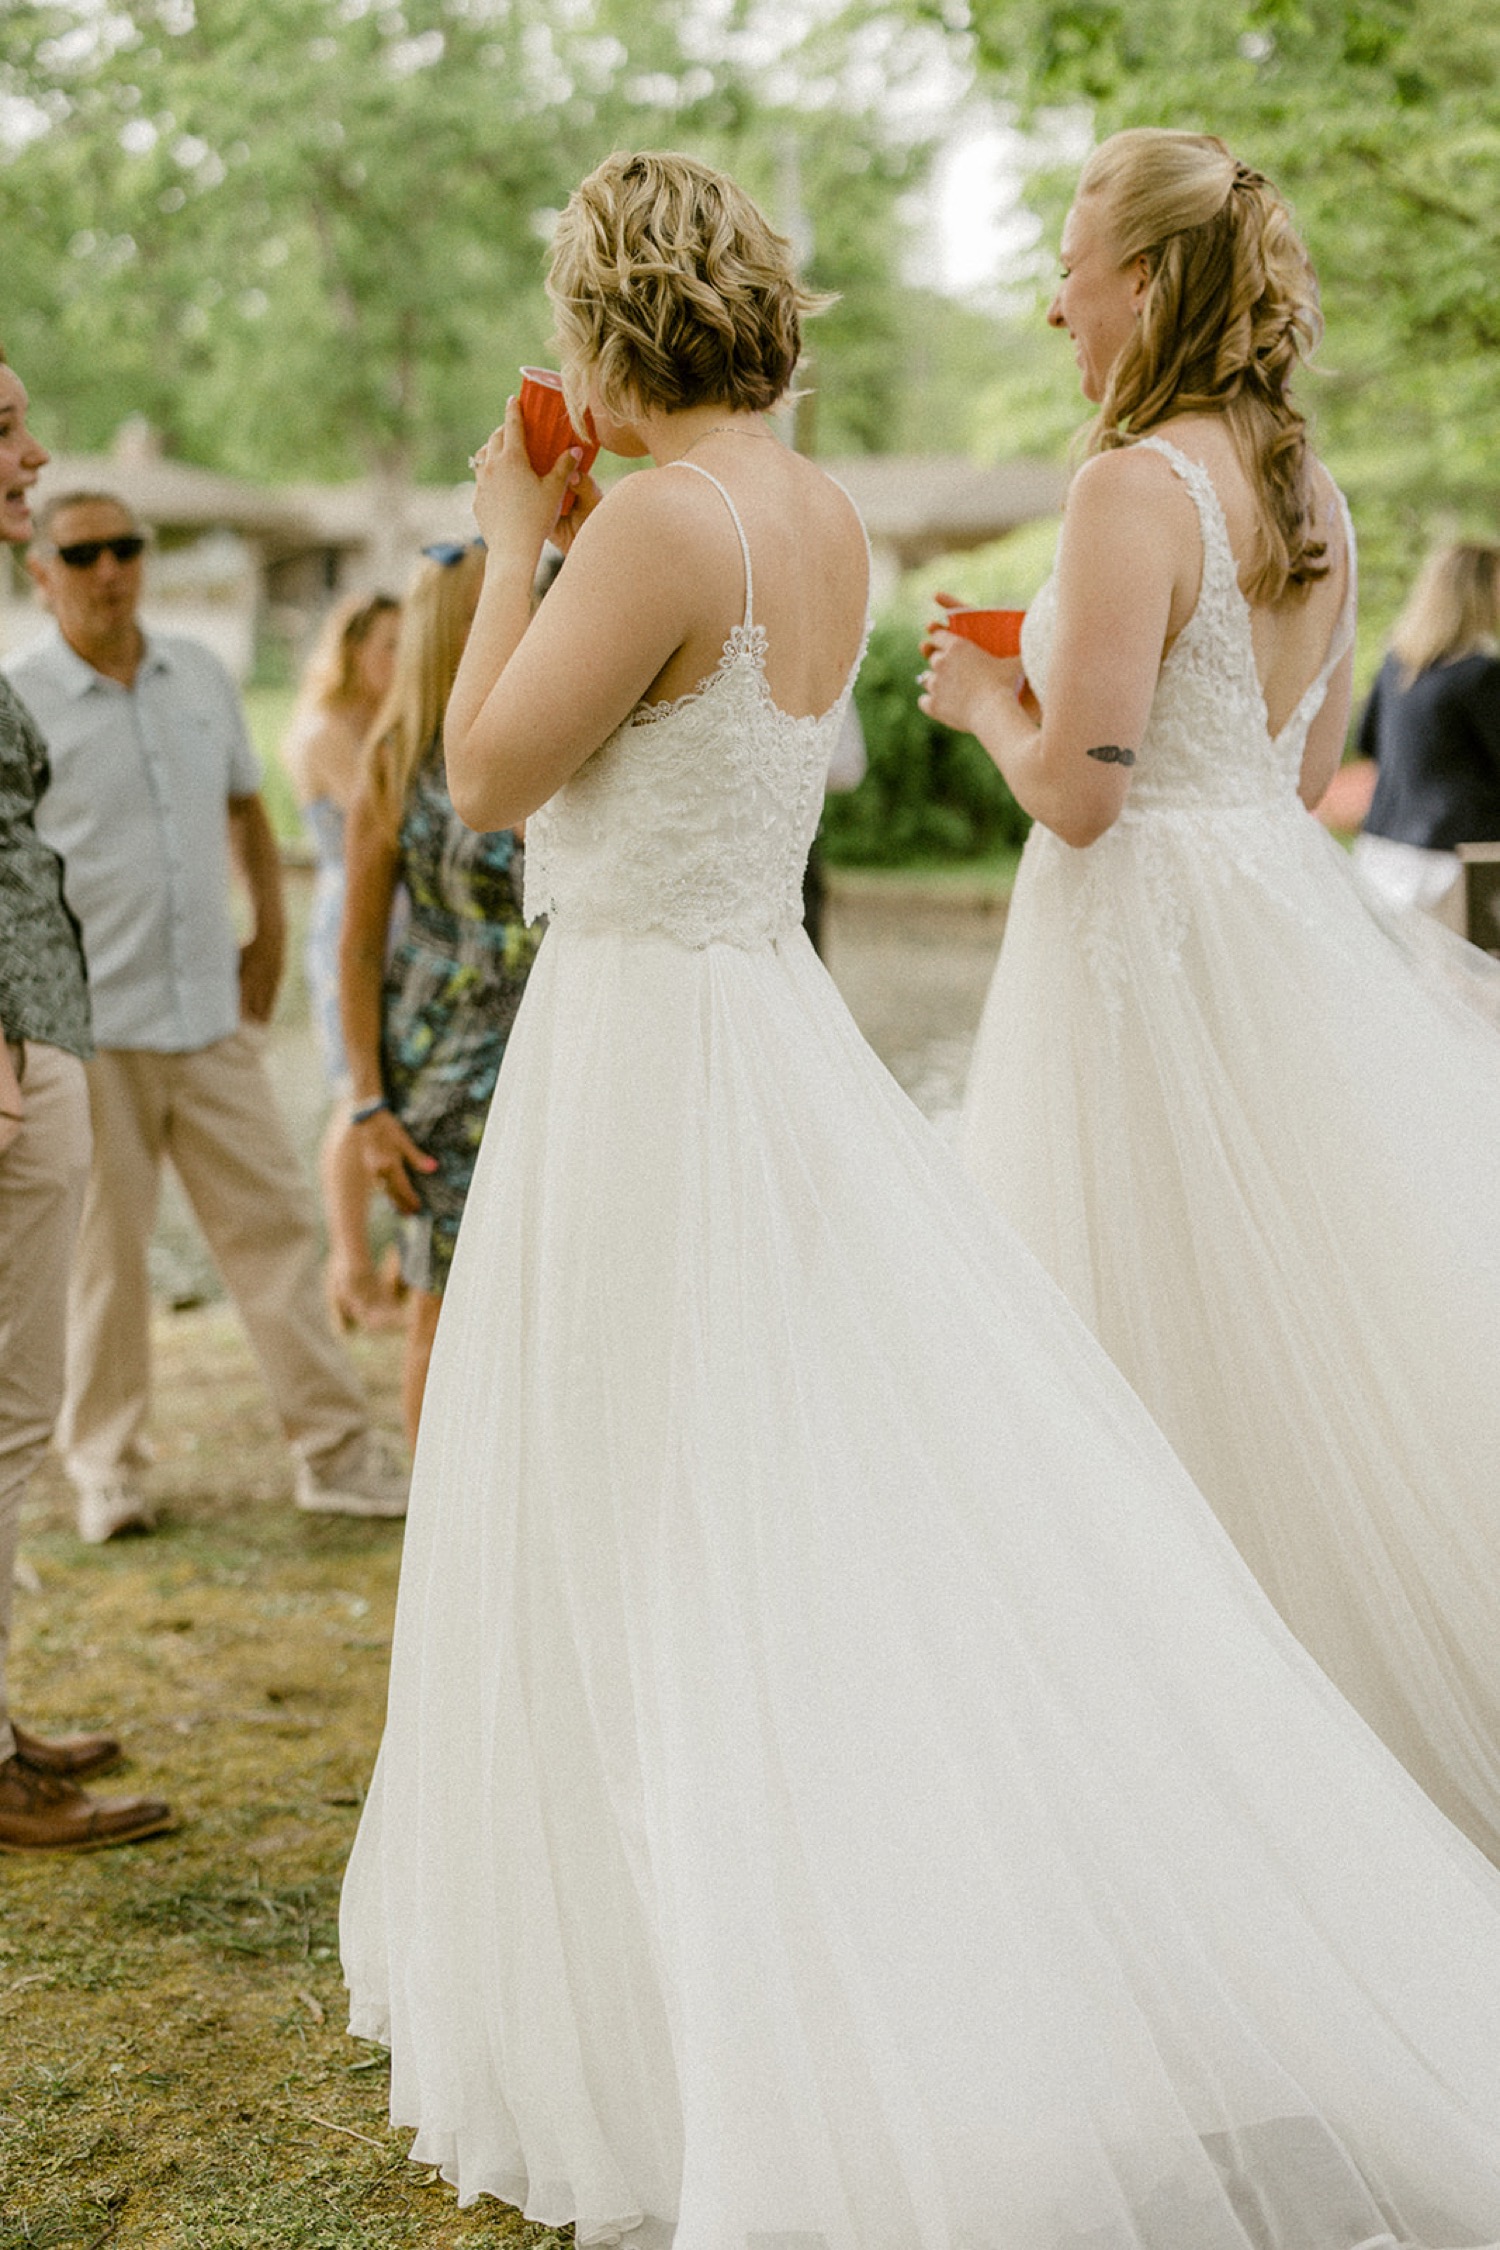 brides walking into backyard micro wedding reception